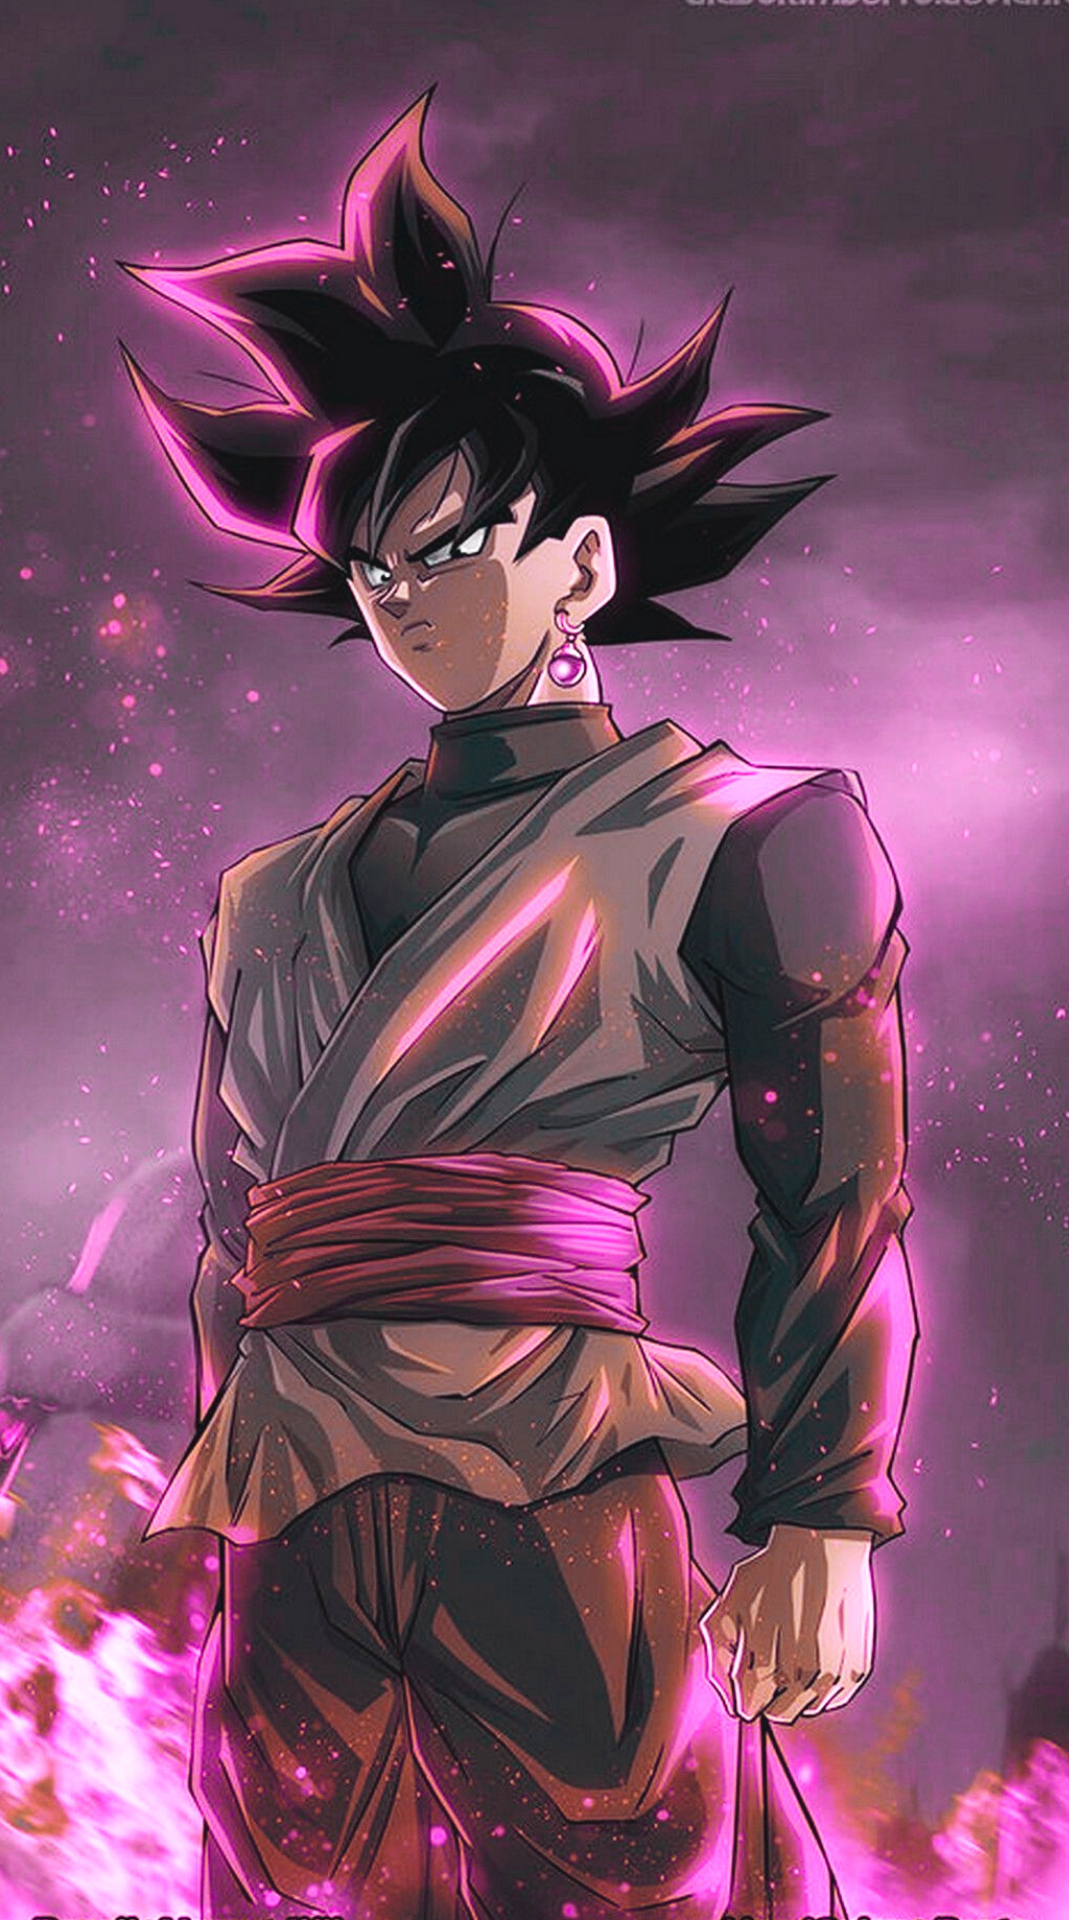 Goku power up Wallpaper Download